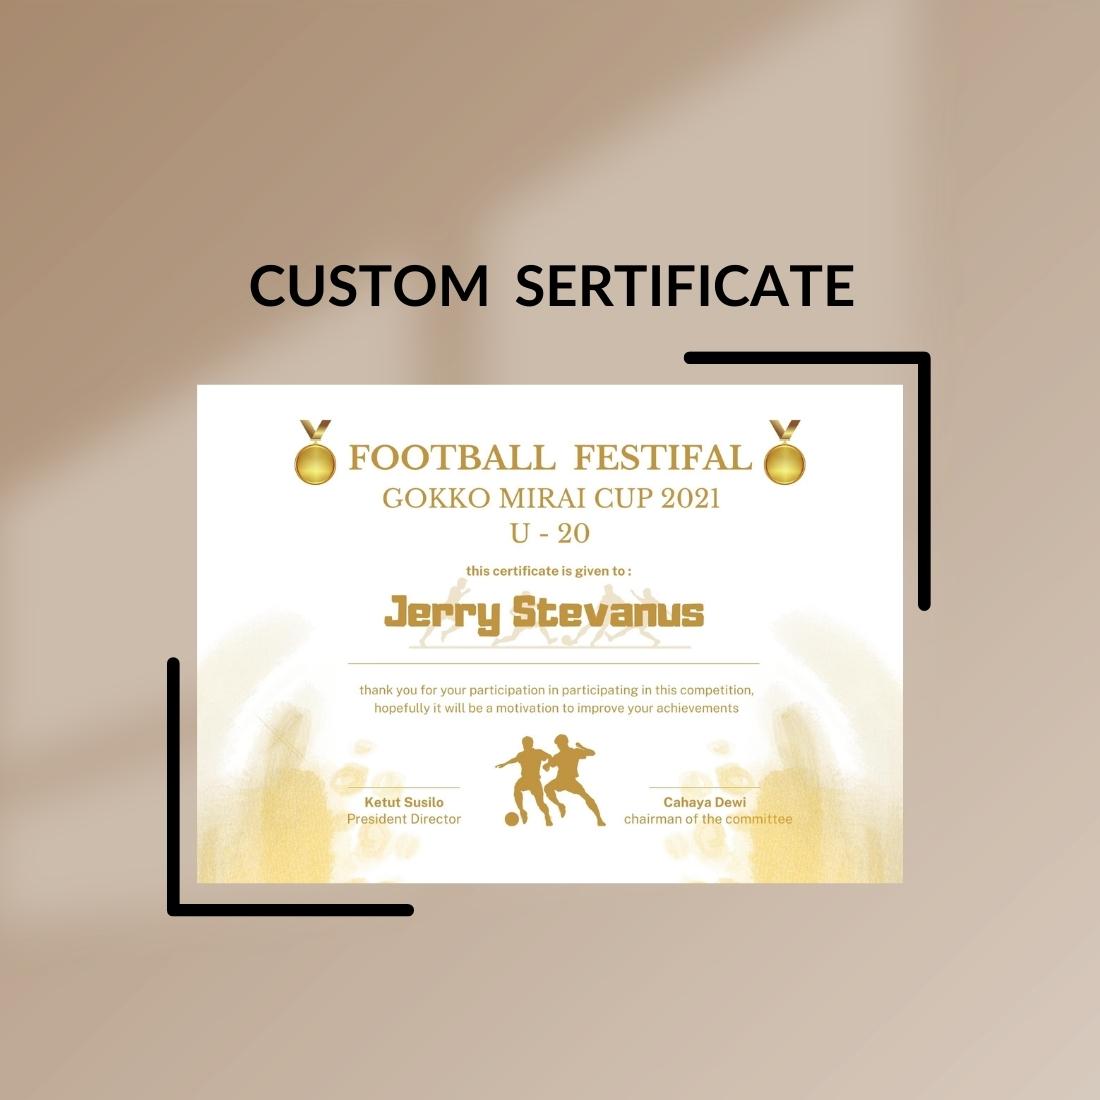 Custom Certificate cover image.